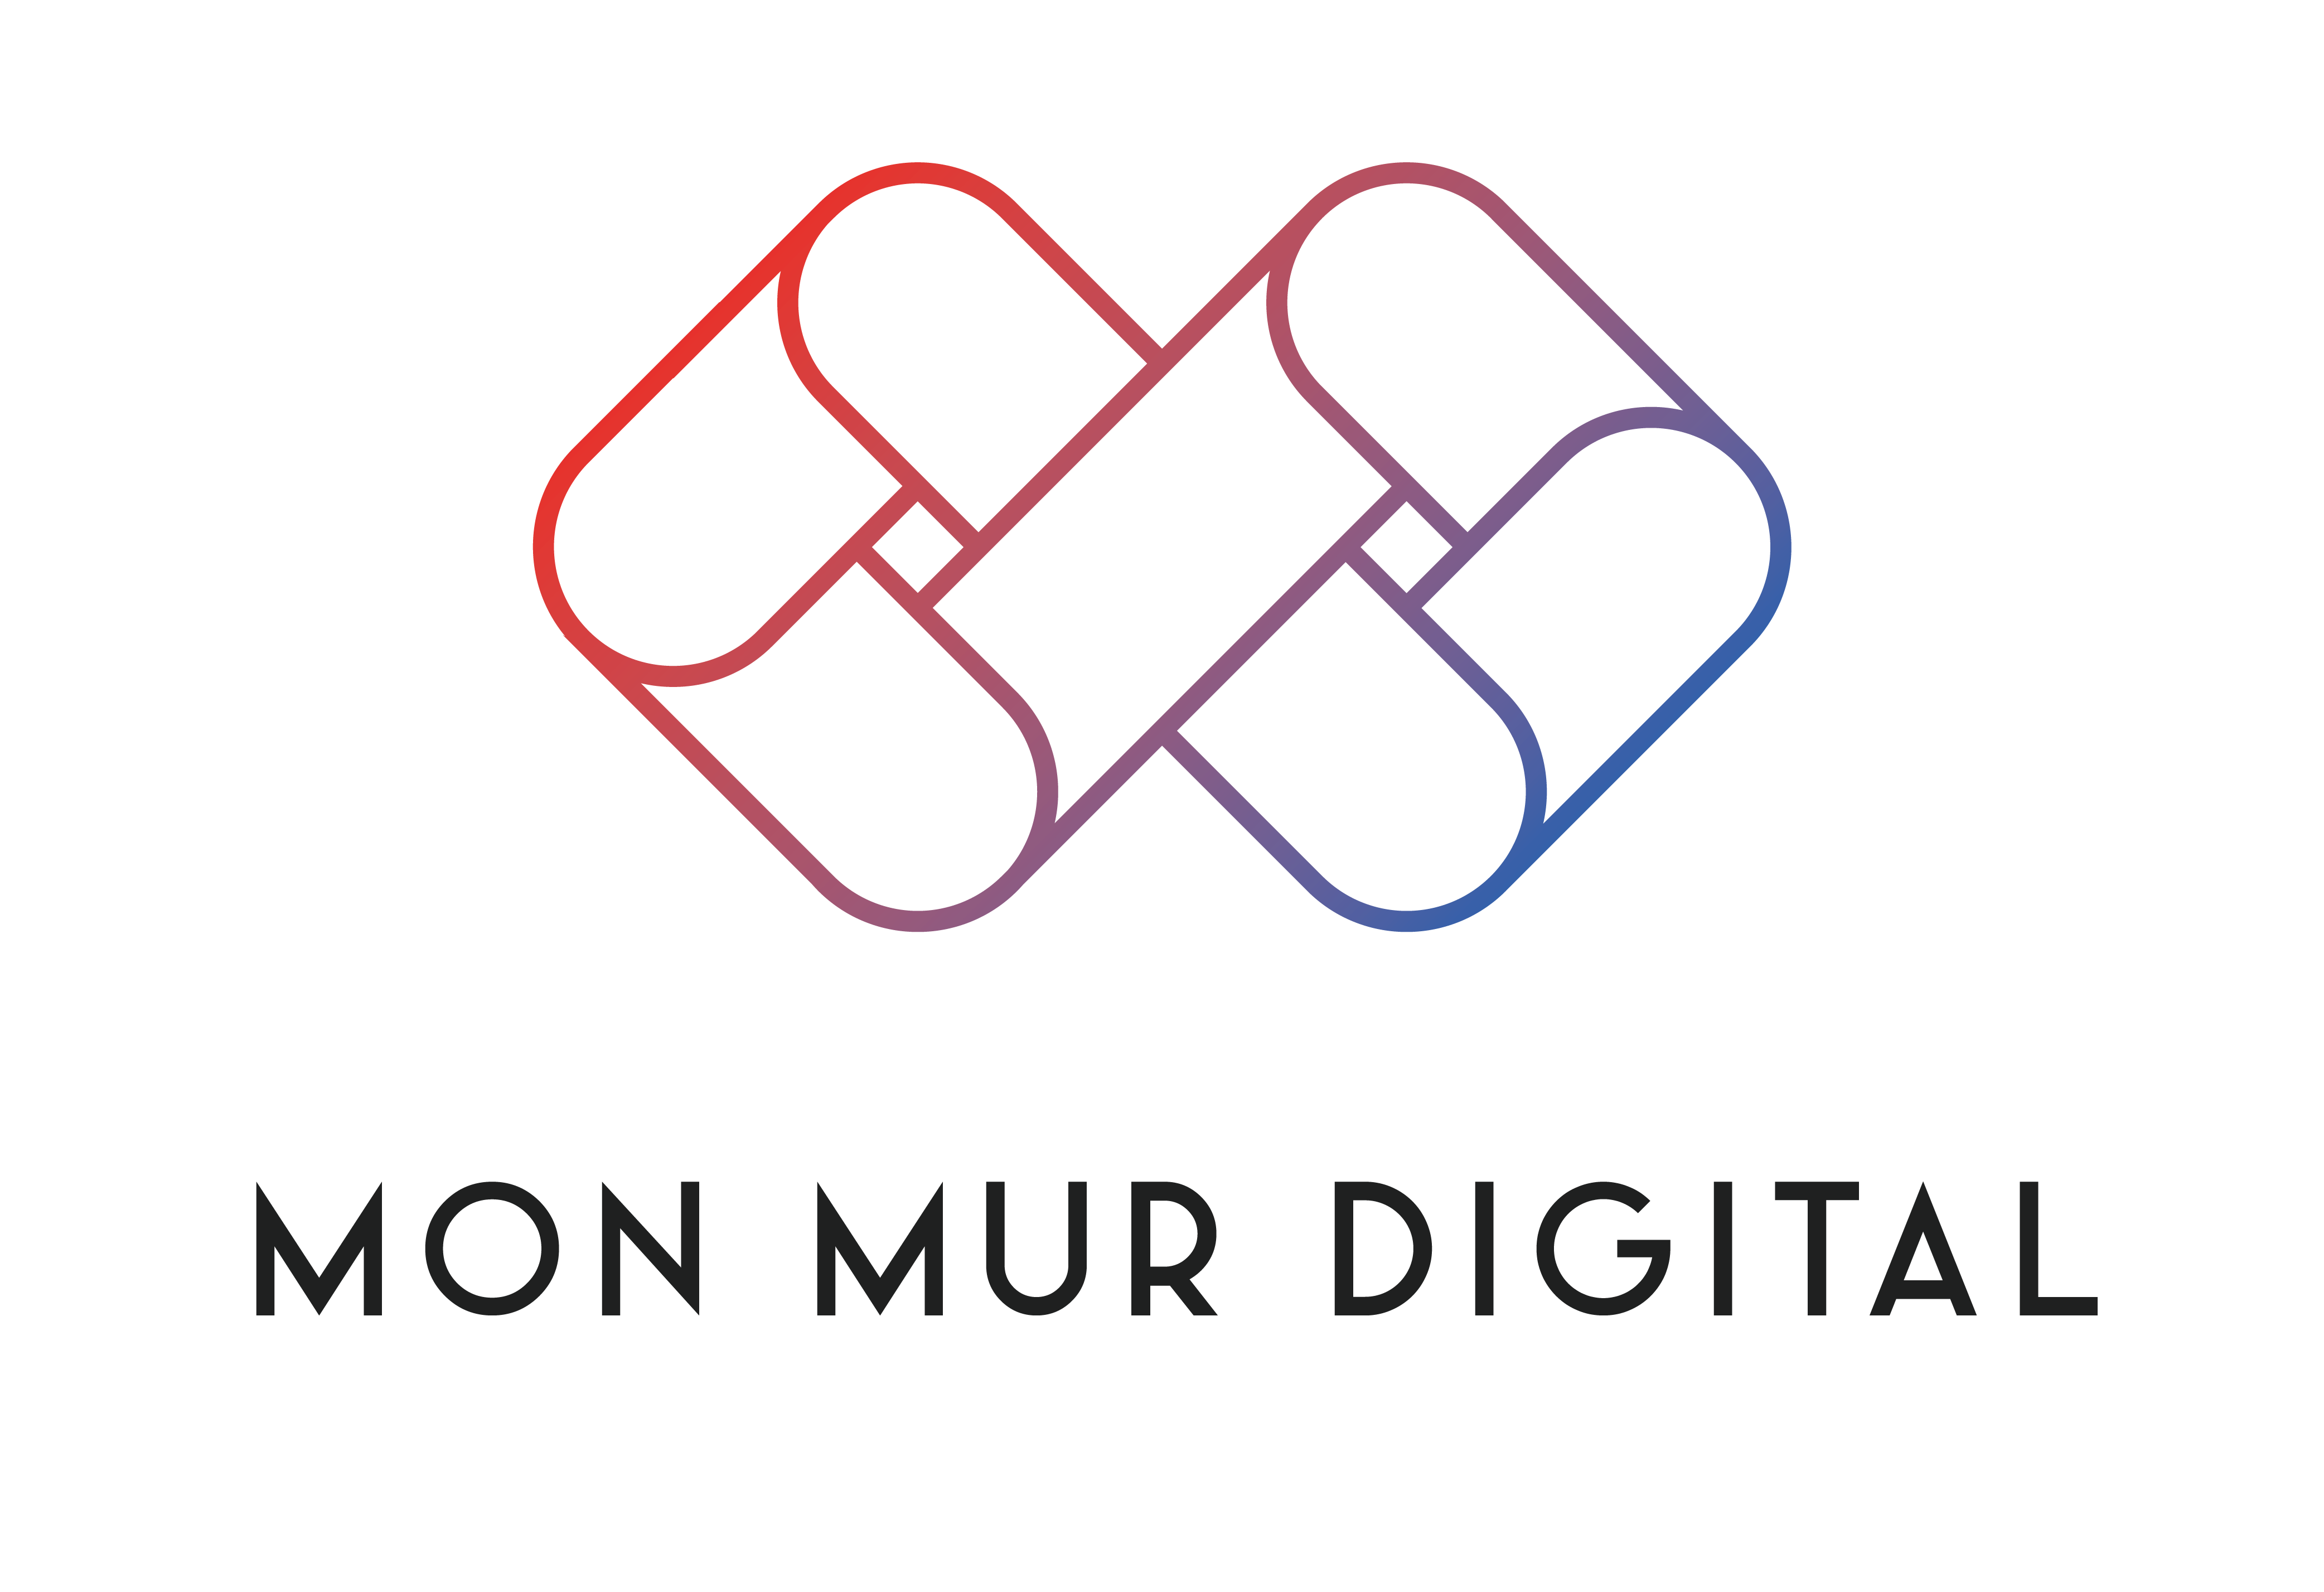 mur digital logo